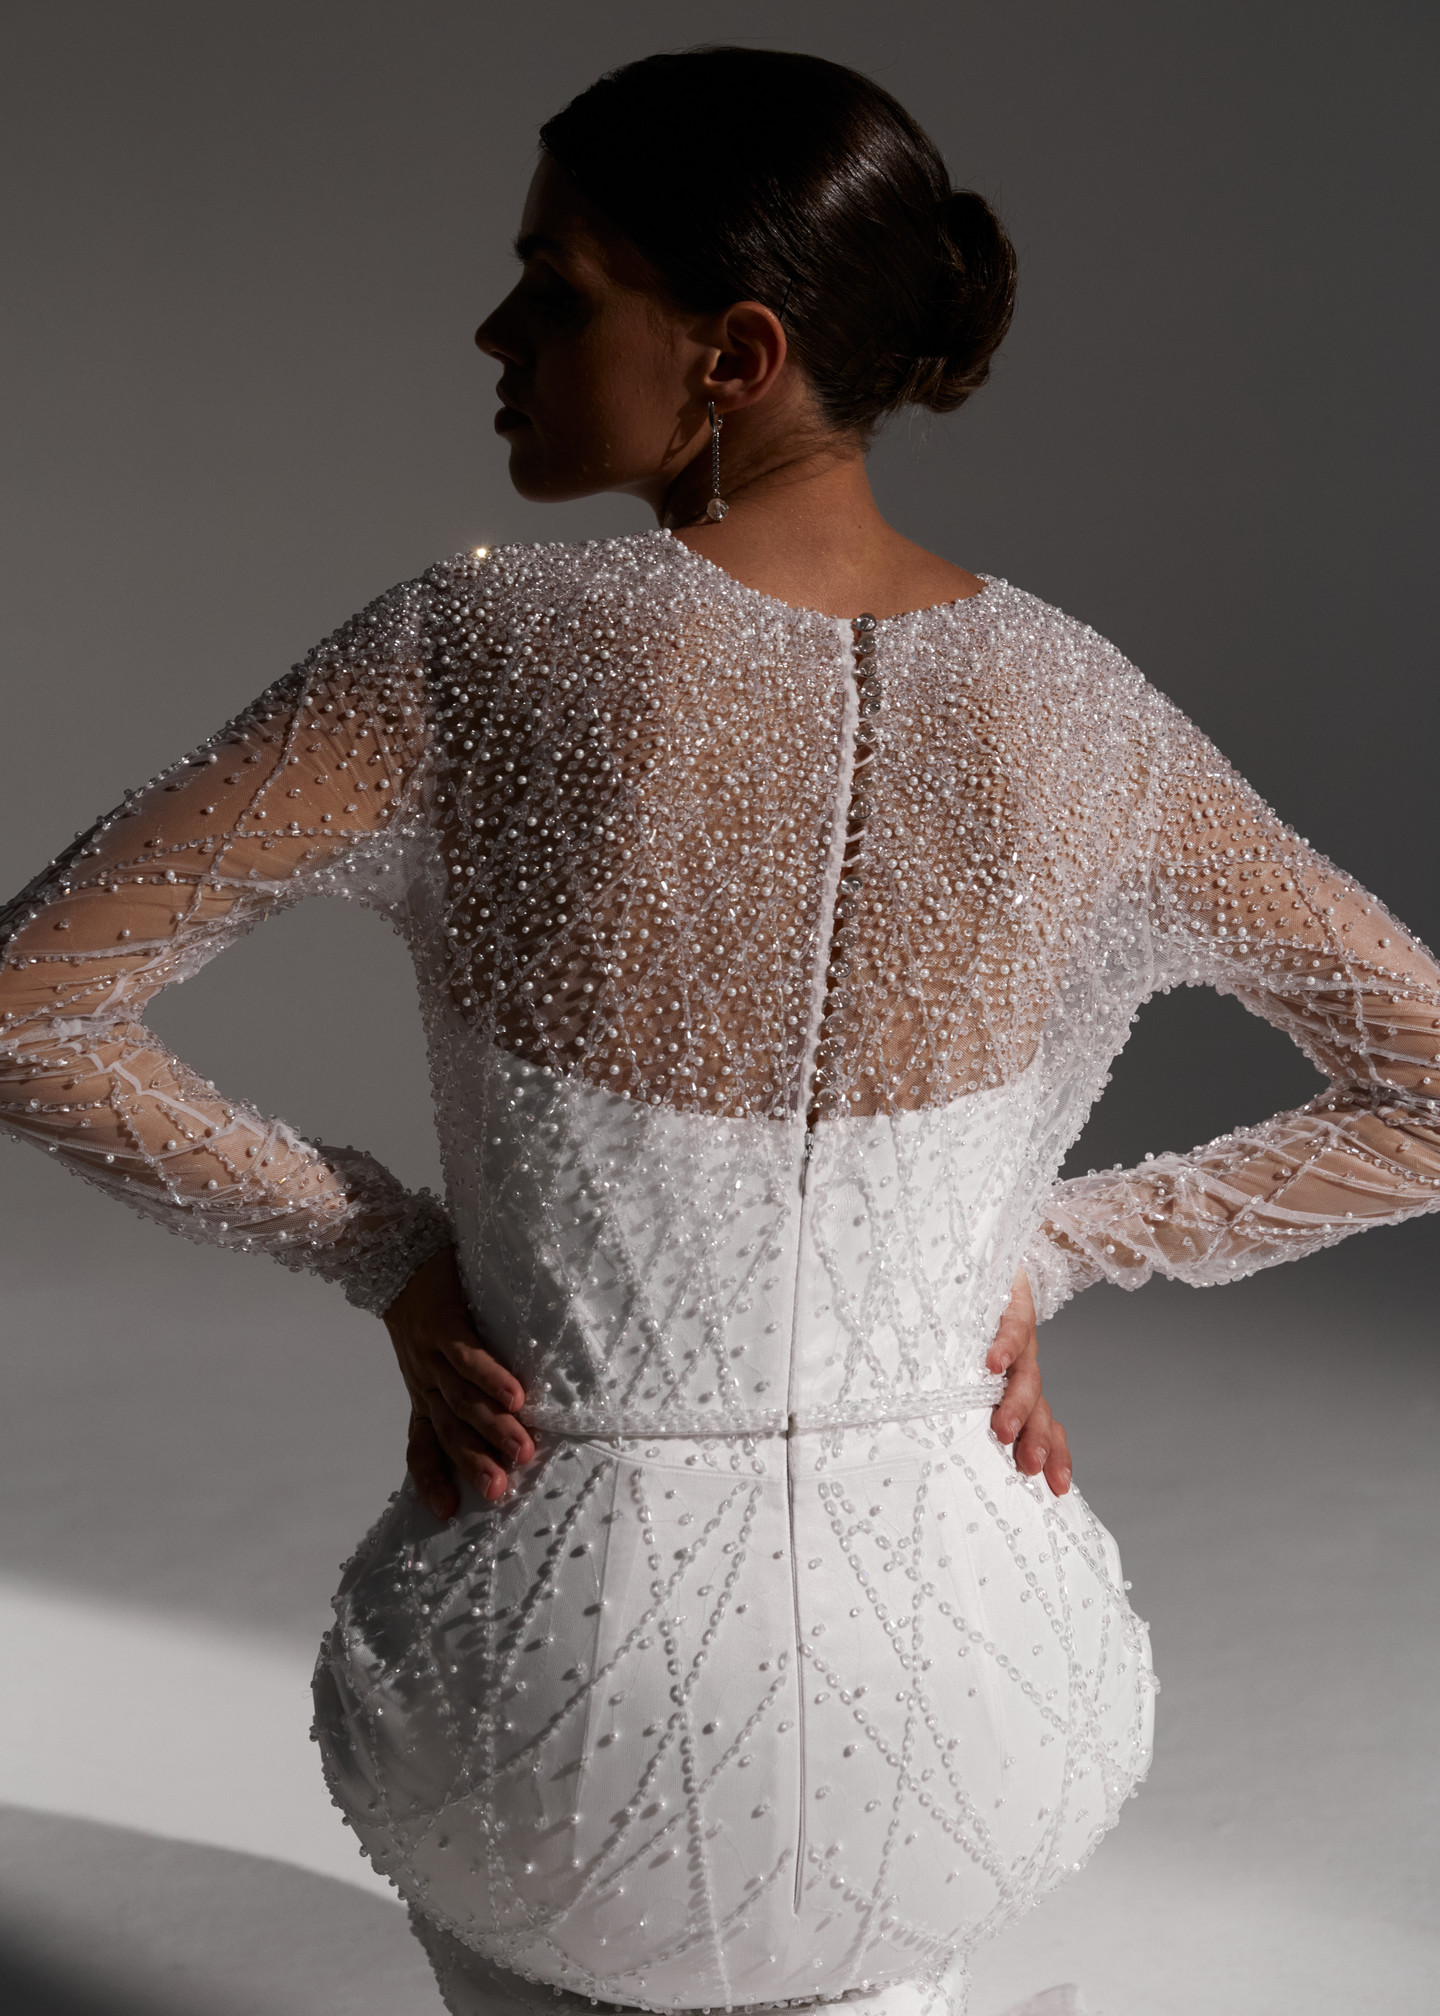 Grazia dress, 2021, couture, dress, bridal, off-white, Grazia, embroidery, sheath silhouette, sleeves